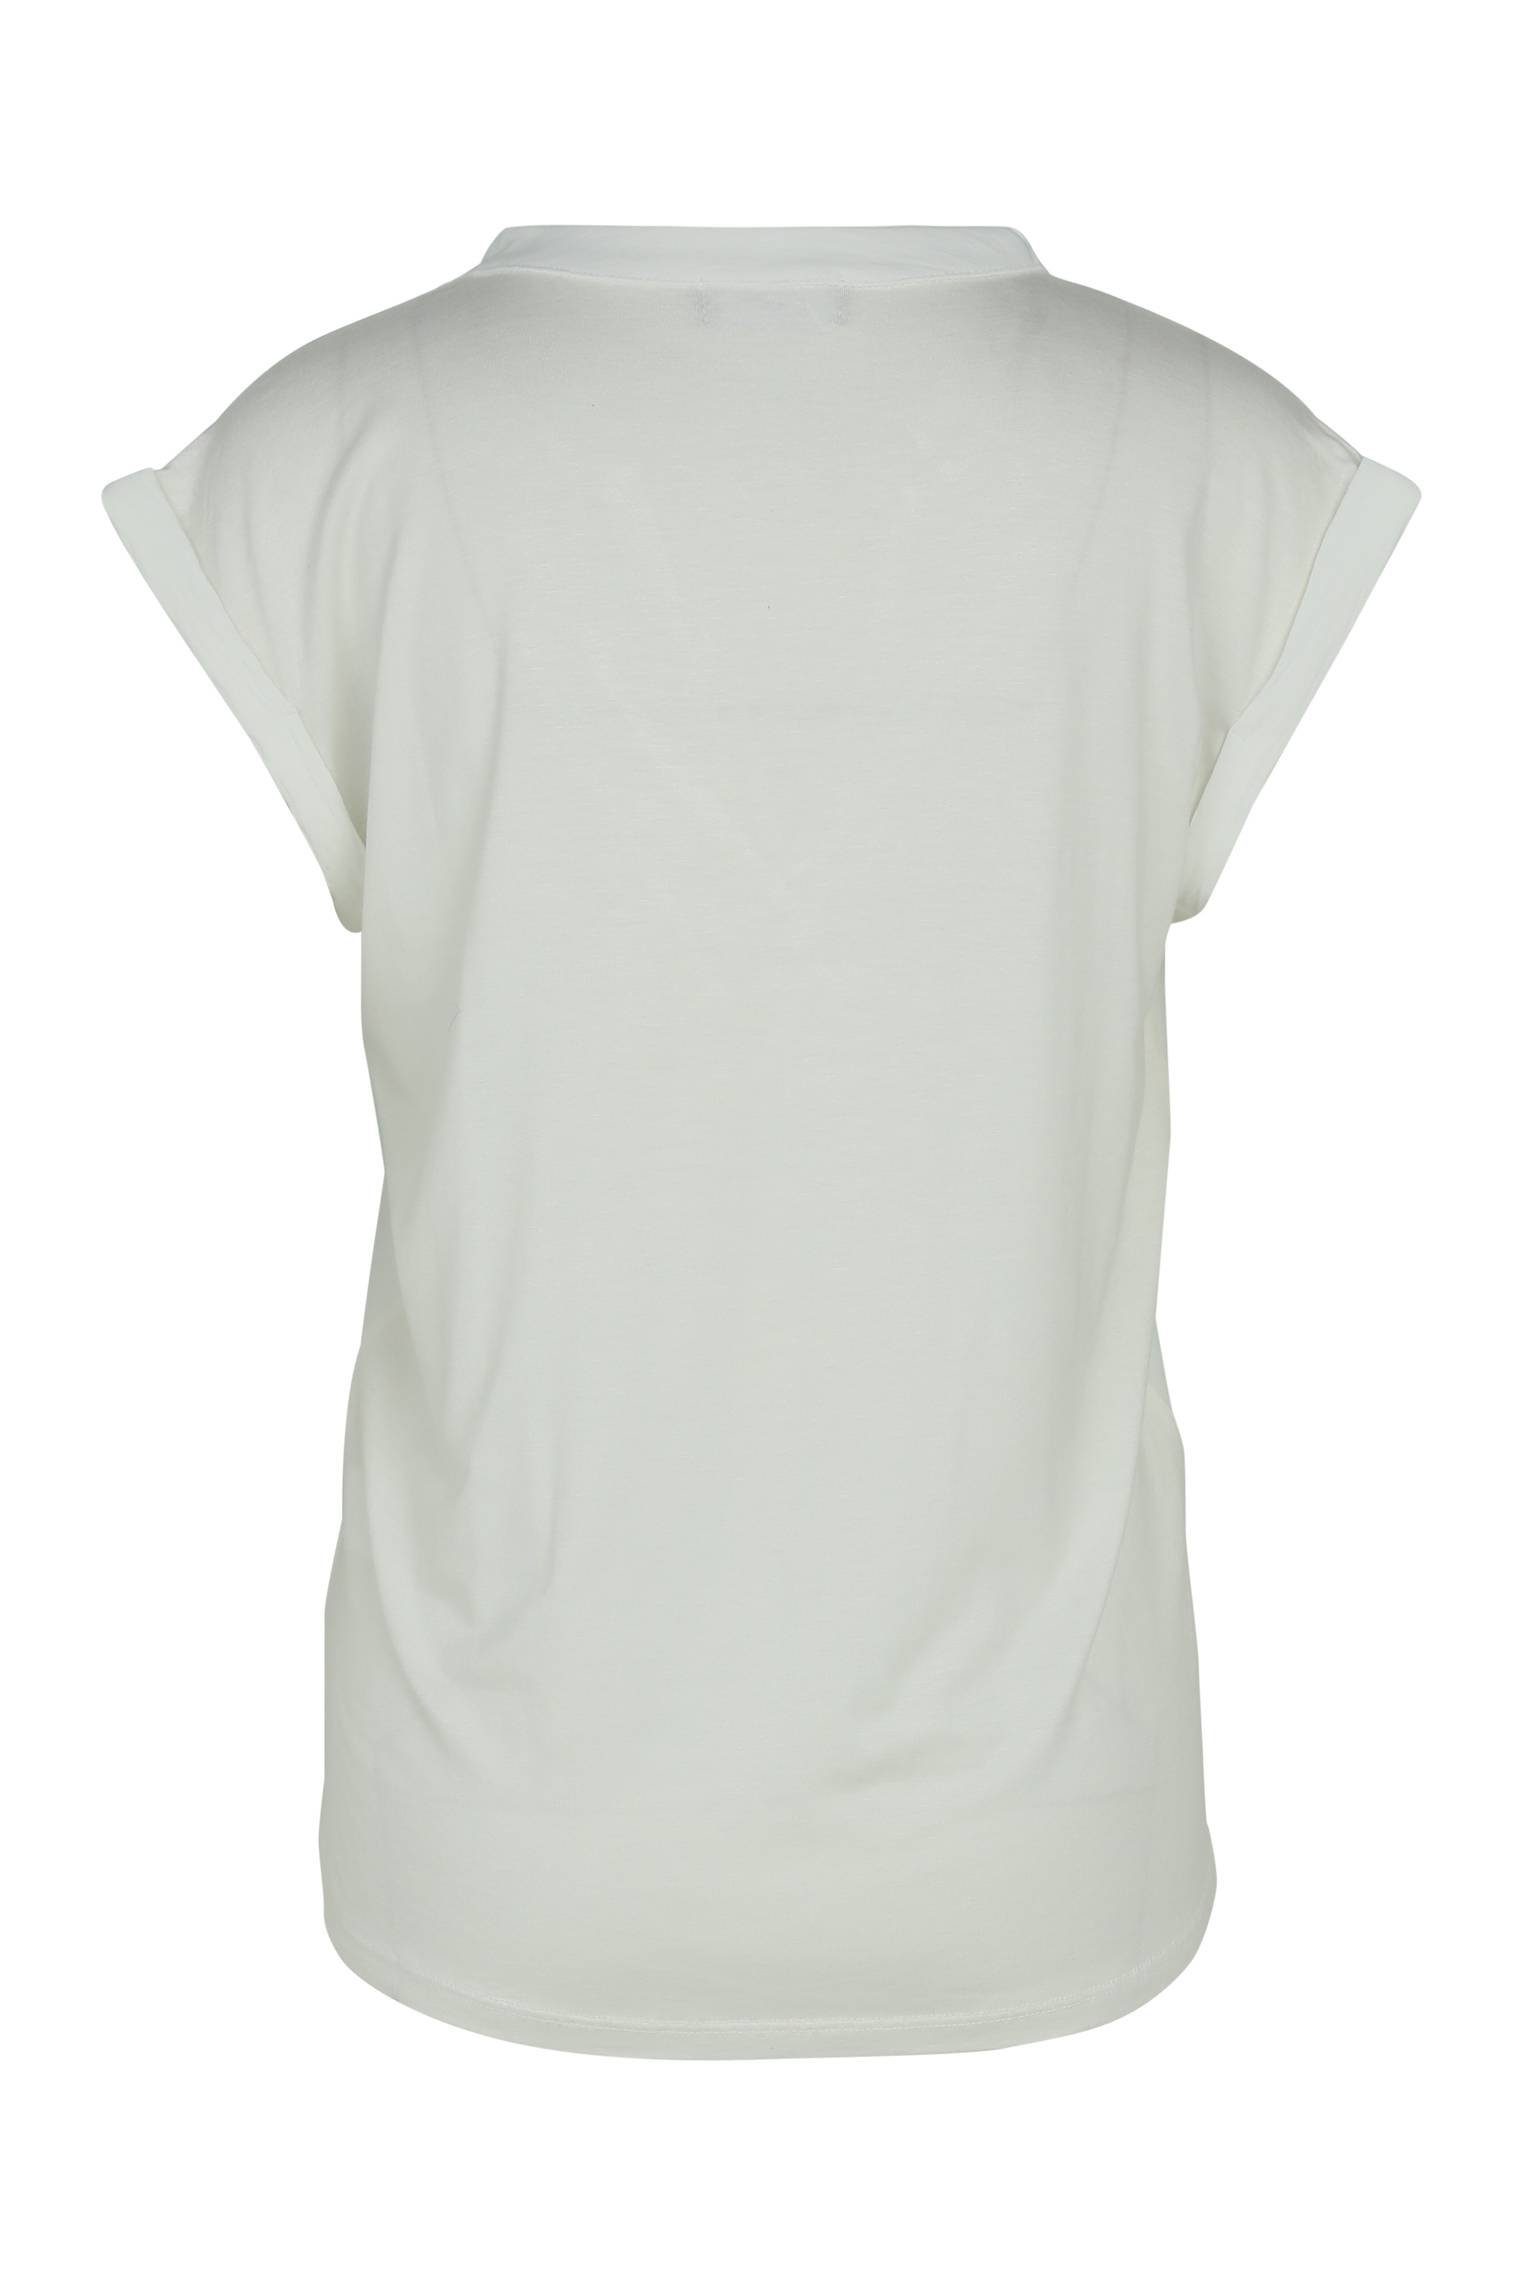 Unifarbenes T-Shirt T-Shirt Cassis Mandarinkragen naturfarben Mit